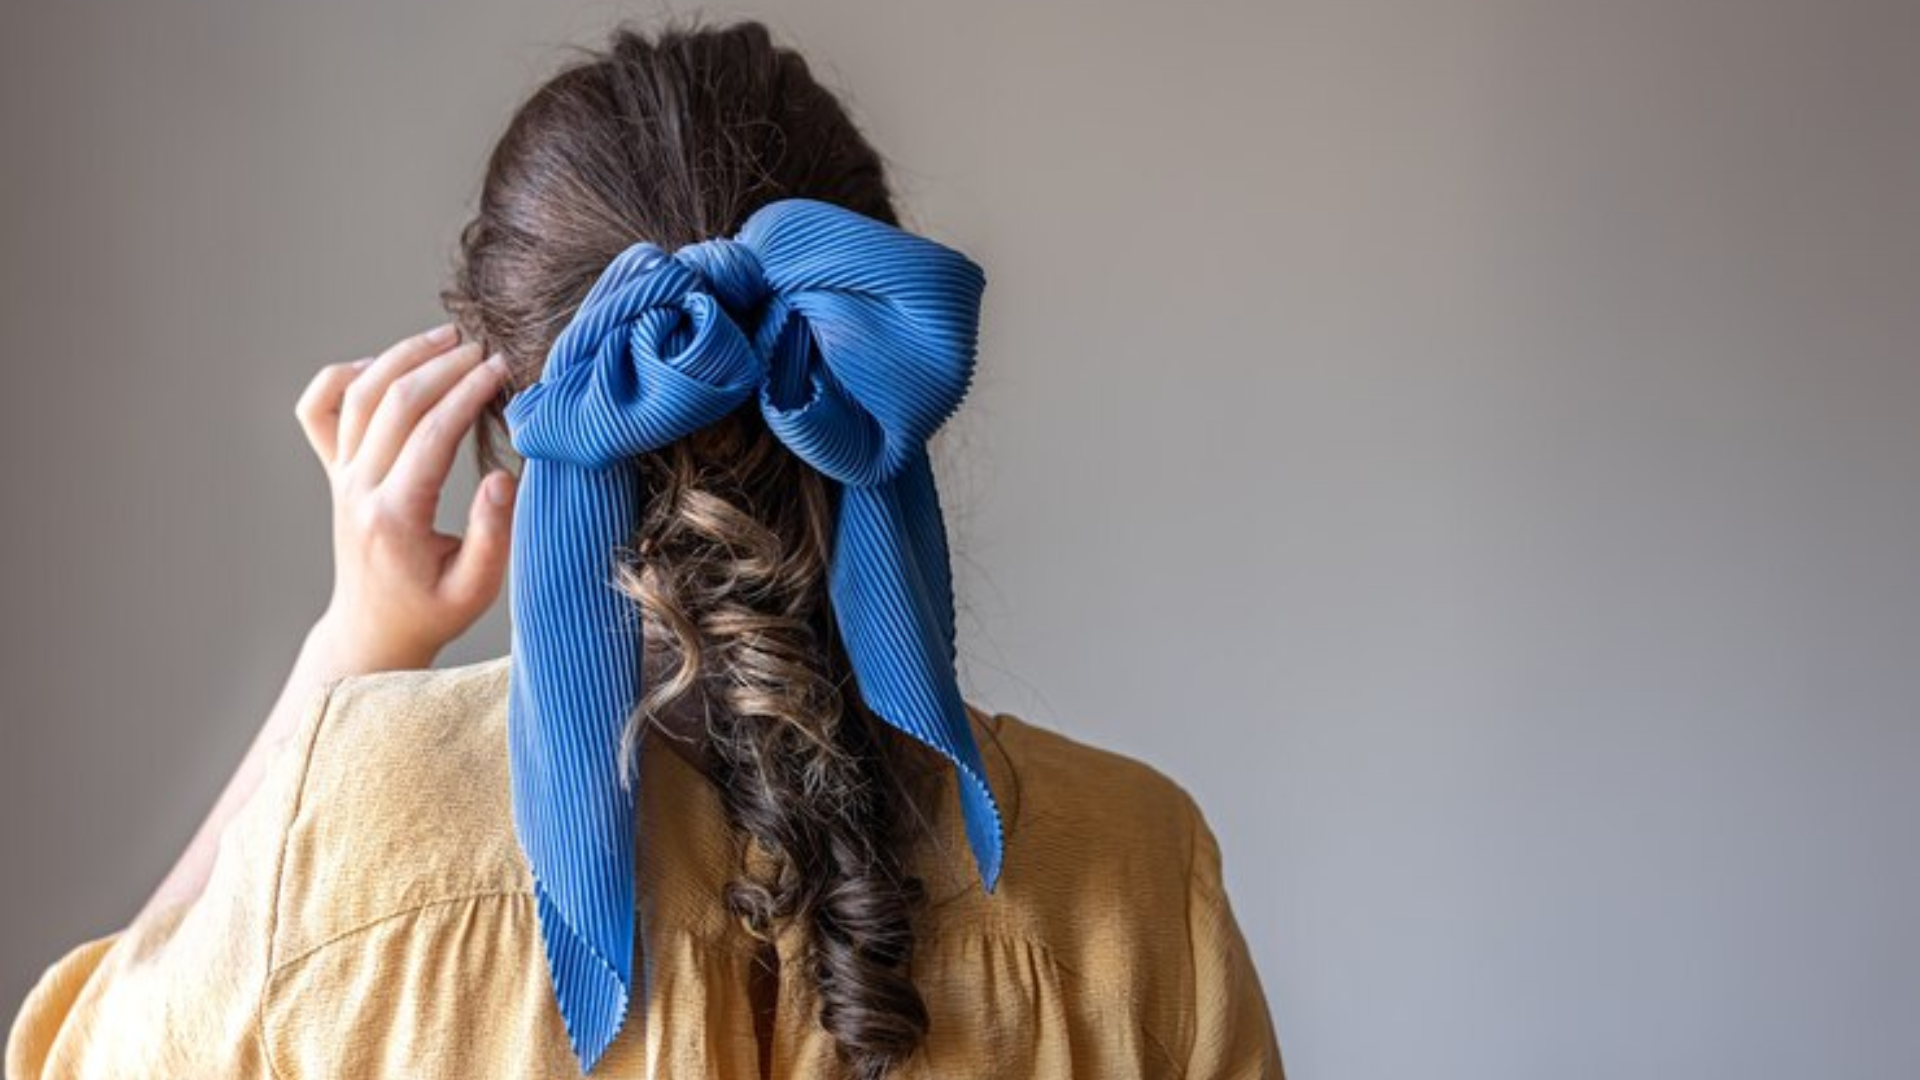 Trik styling rambut dengan scarf